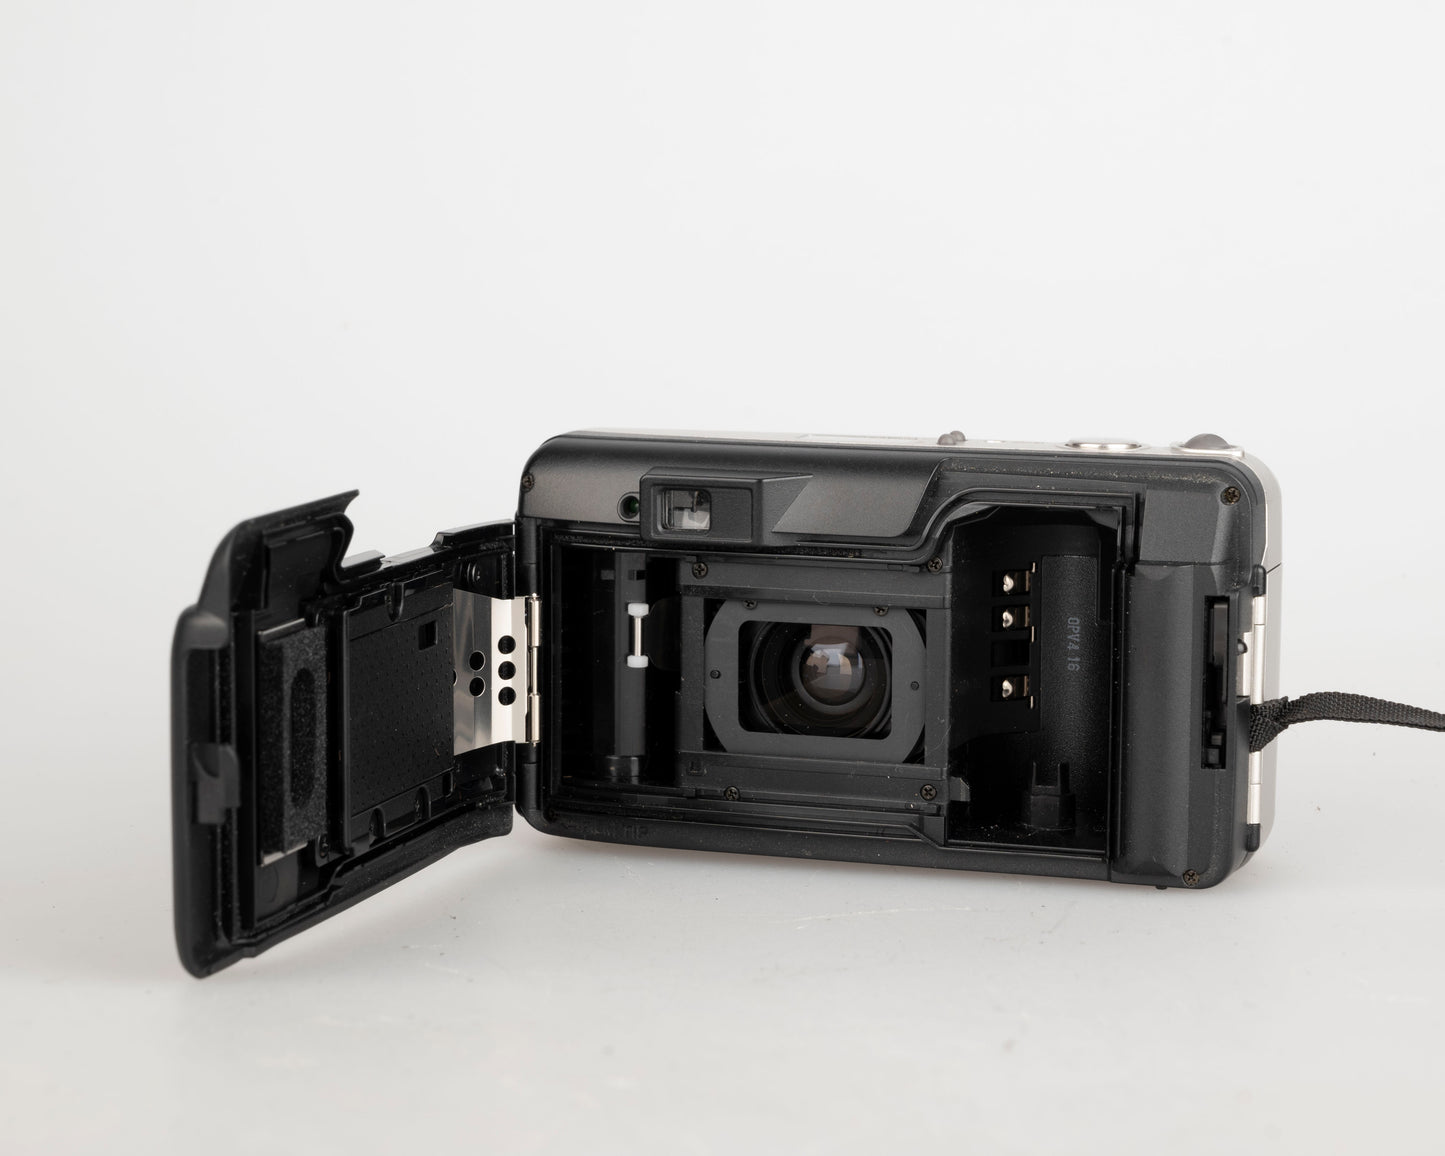 Olympus Infinity Zoom 80 35mm camera w/ case (serial 4070855)